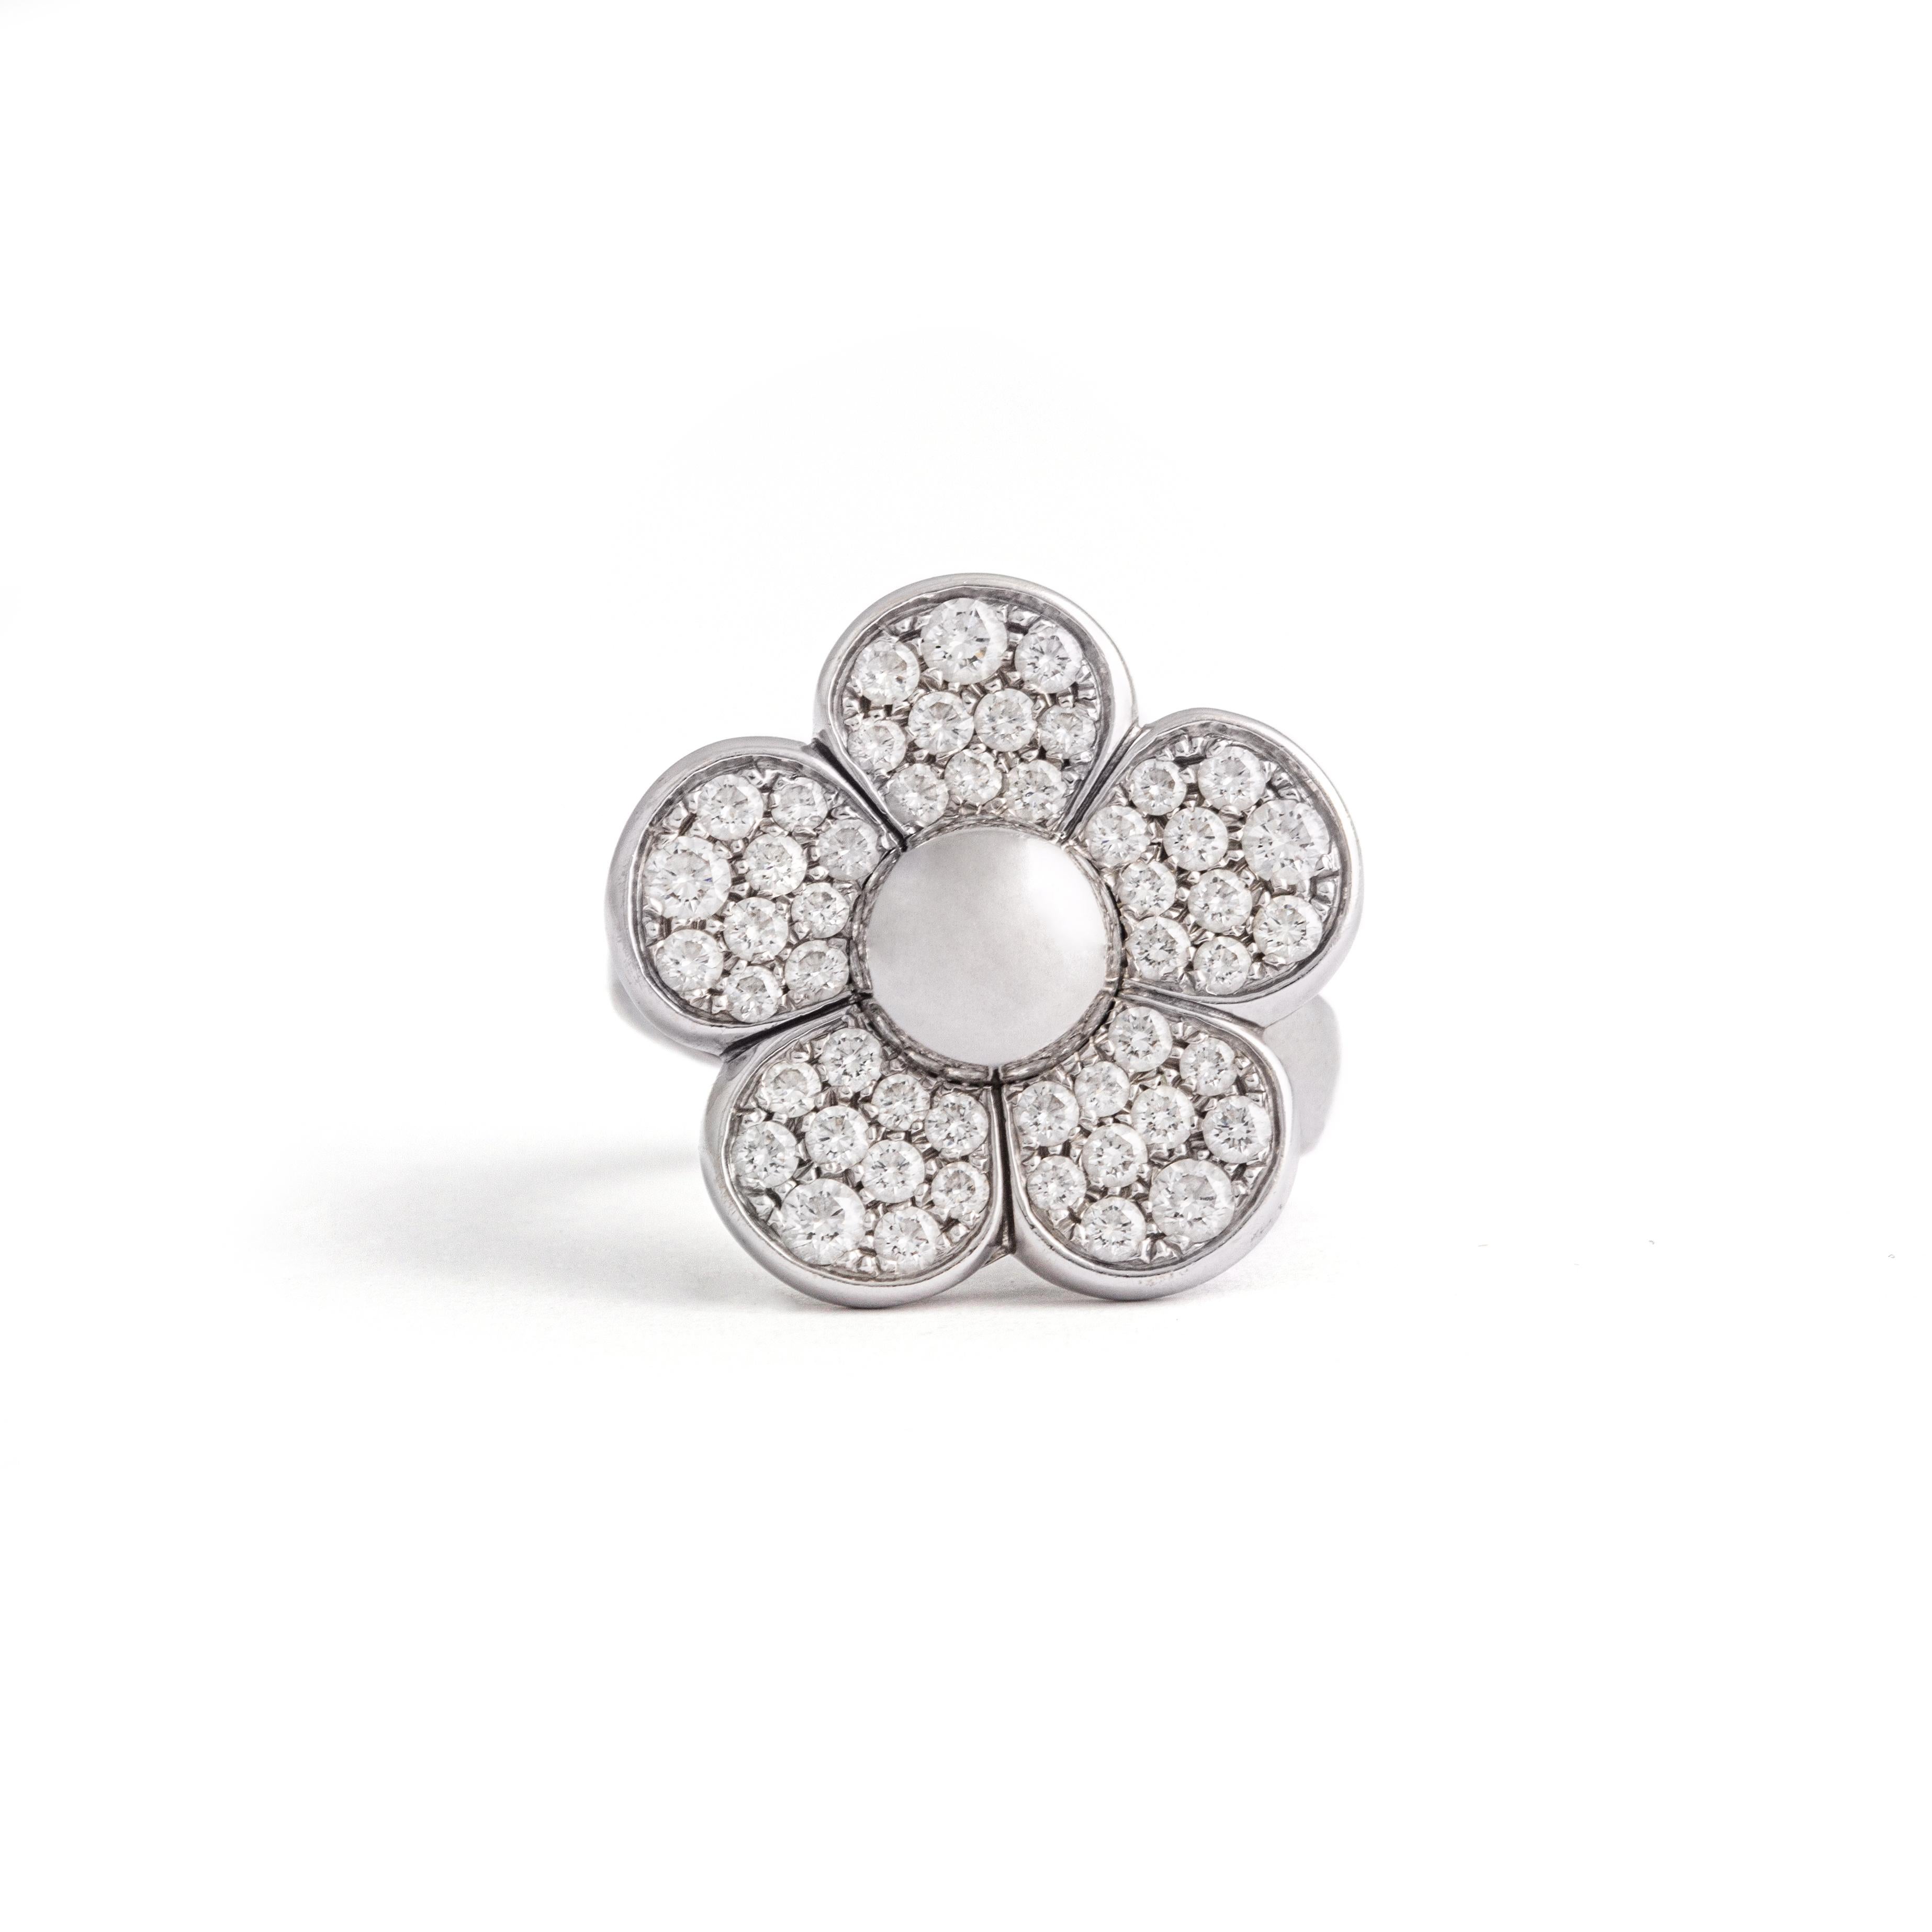 Diamond White Gold 18K Flower Designed Ring.
Signed Schreiber.
Total weight: 14.76 grams.
Size: 8.25